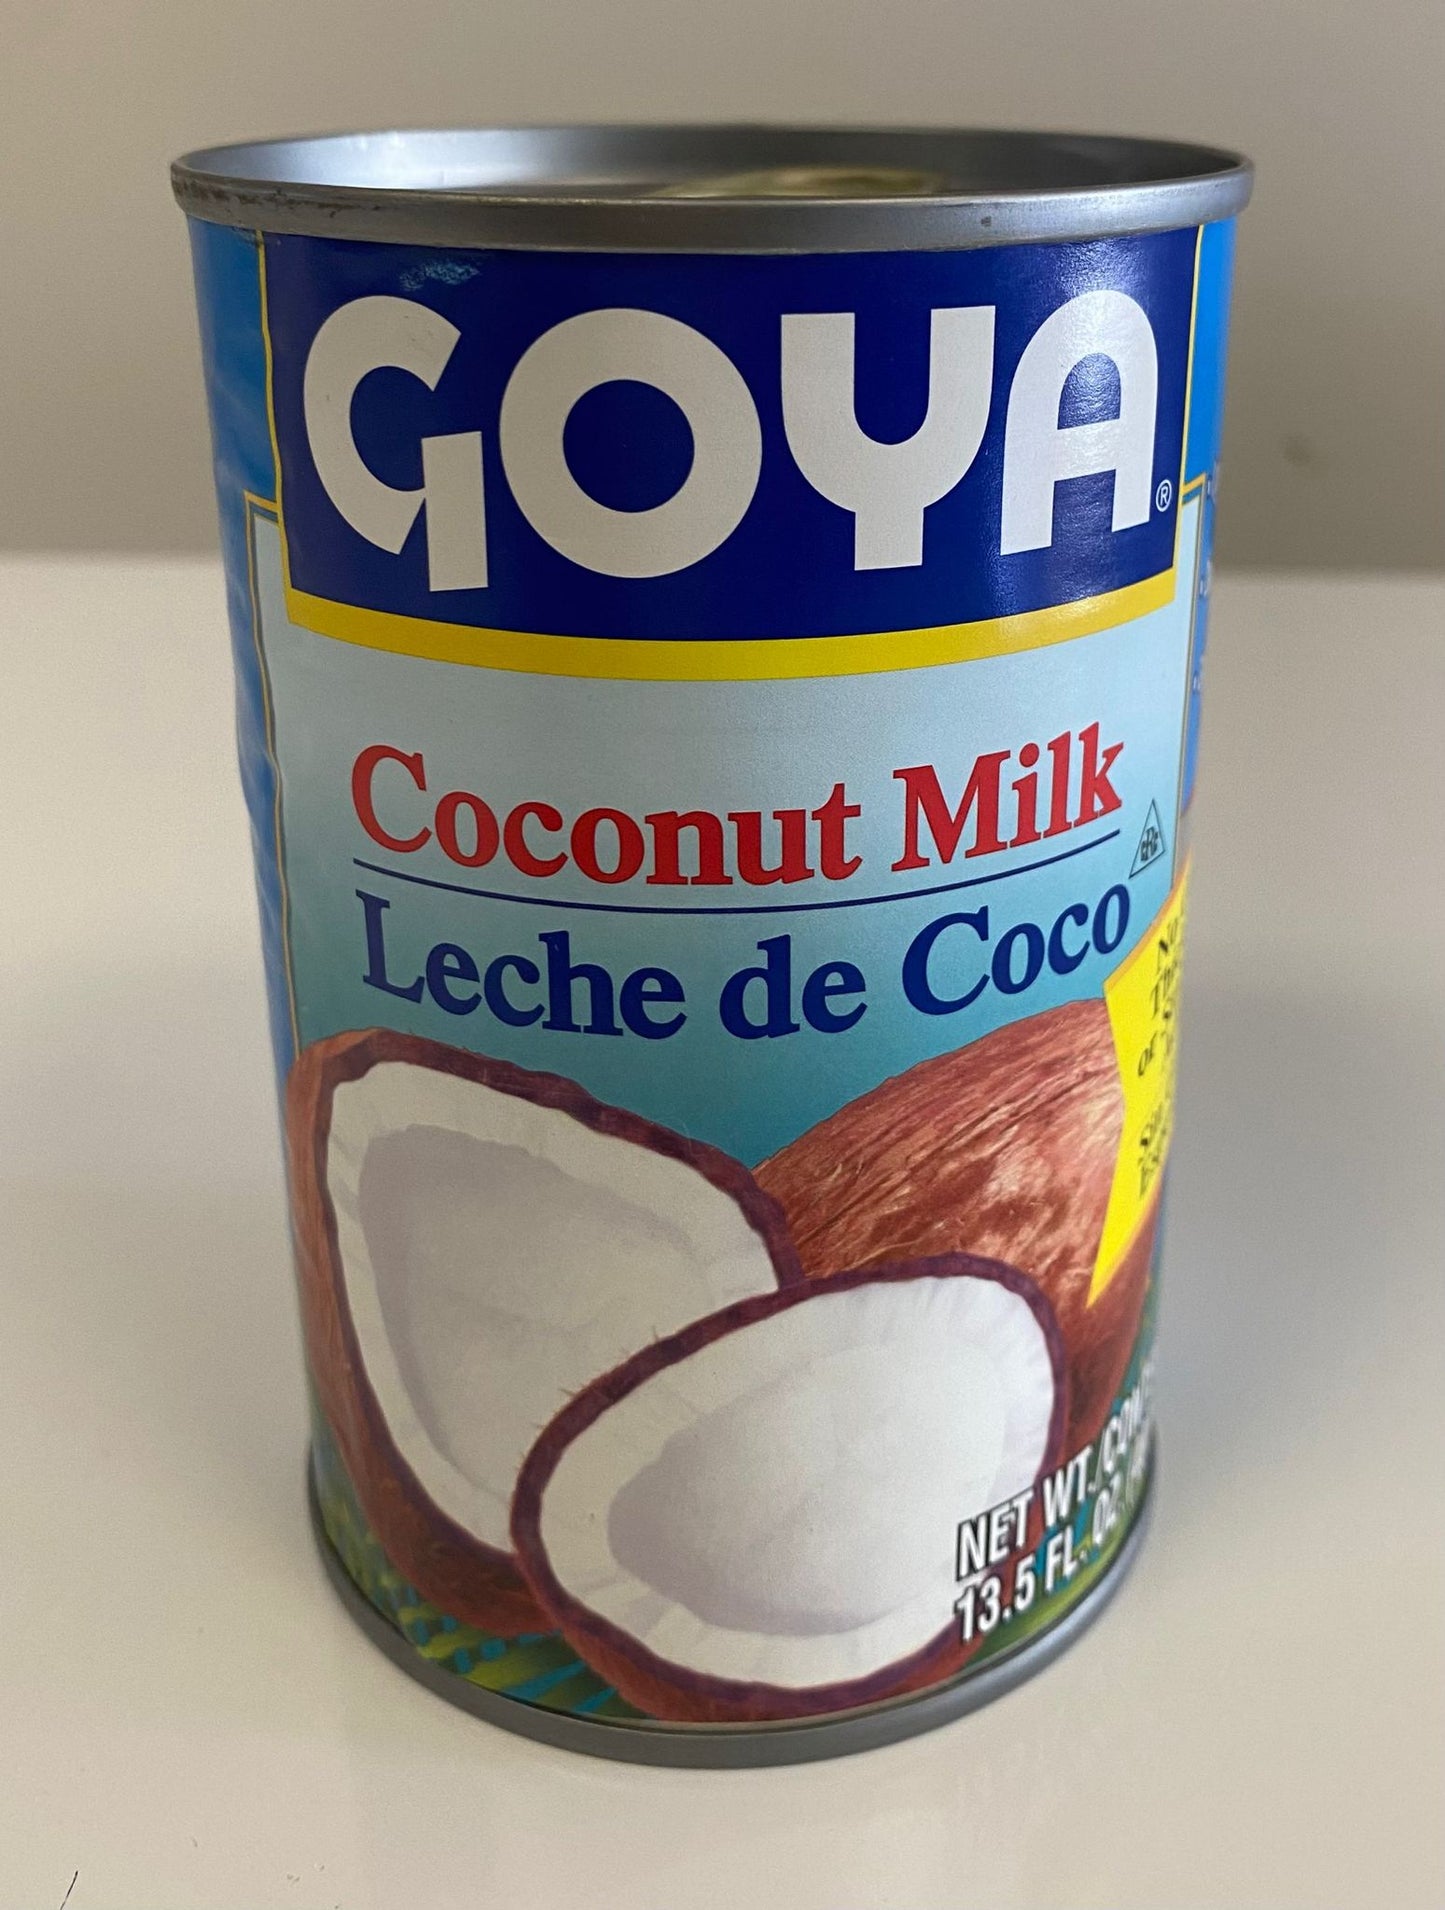 Coconut Milk 13.5oz